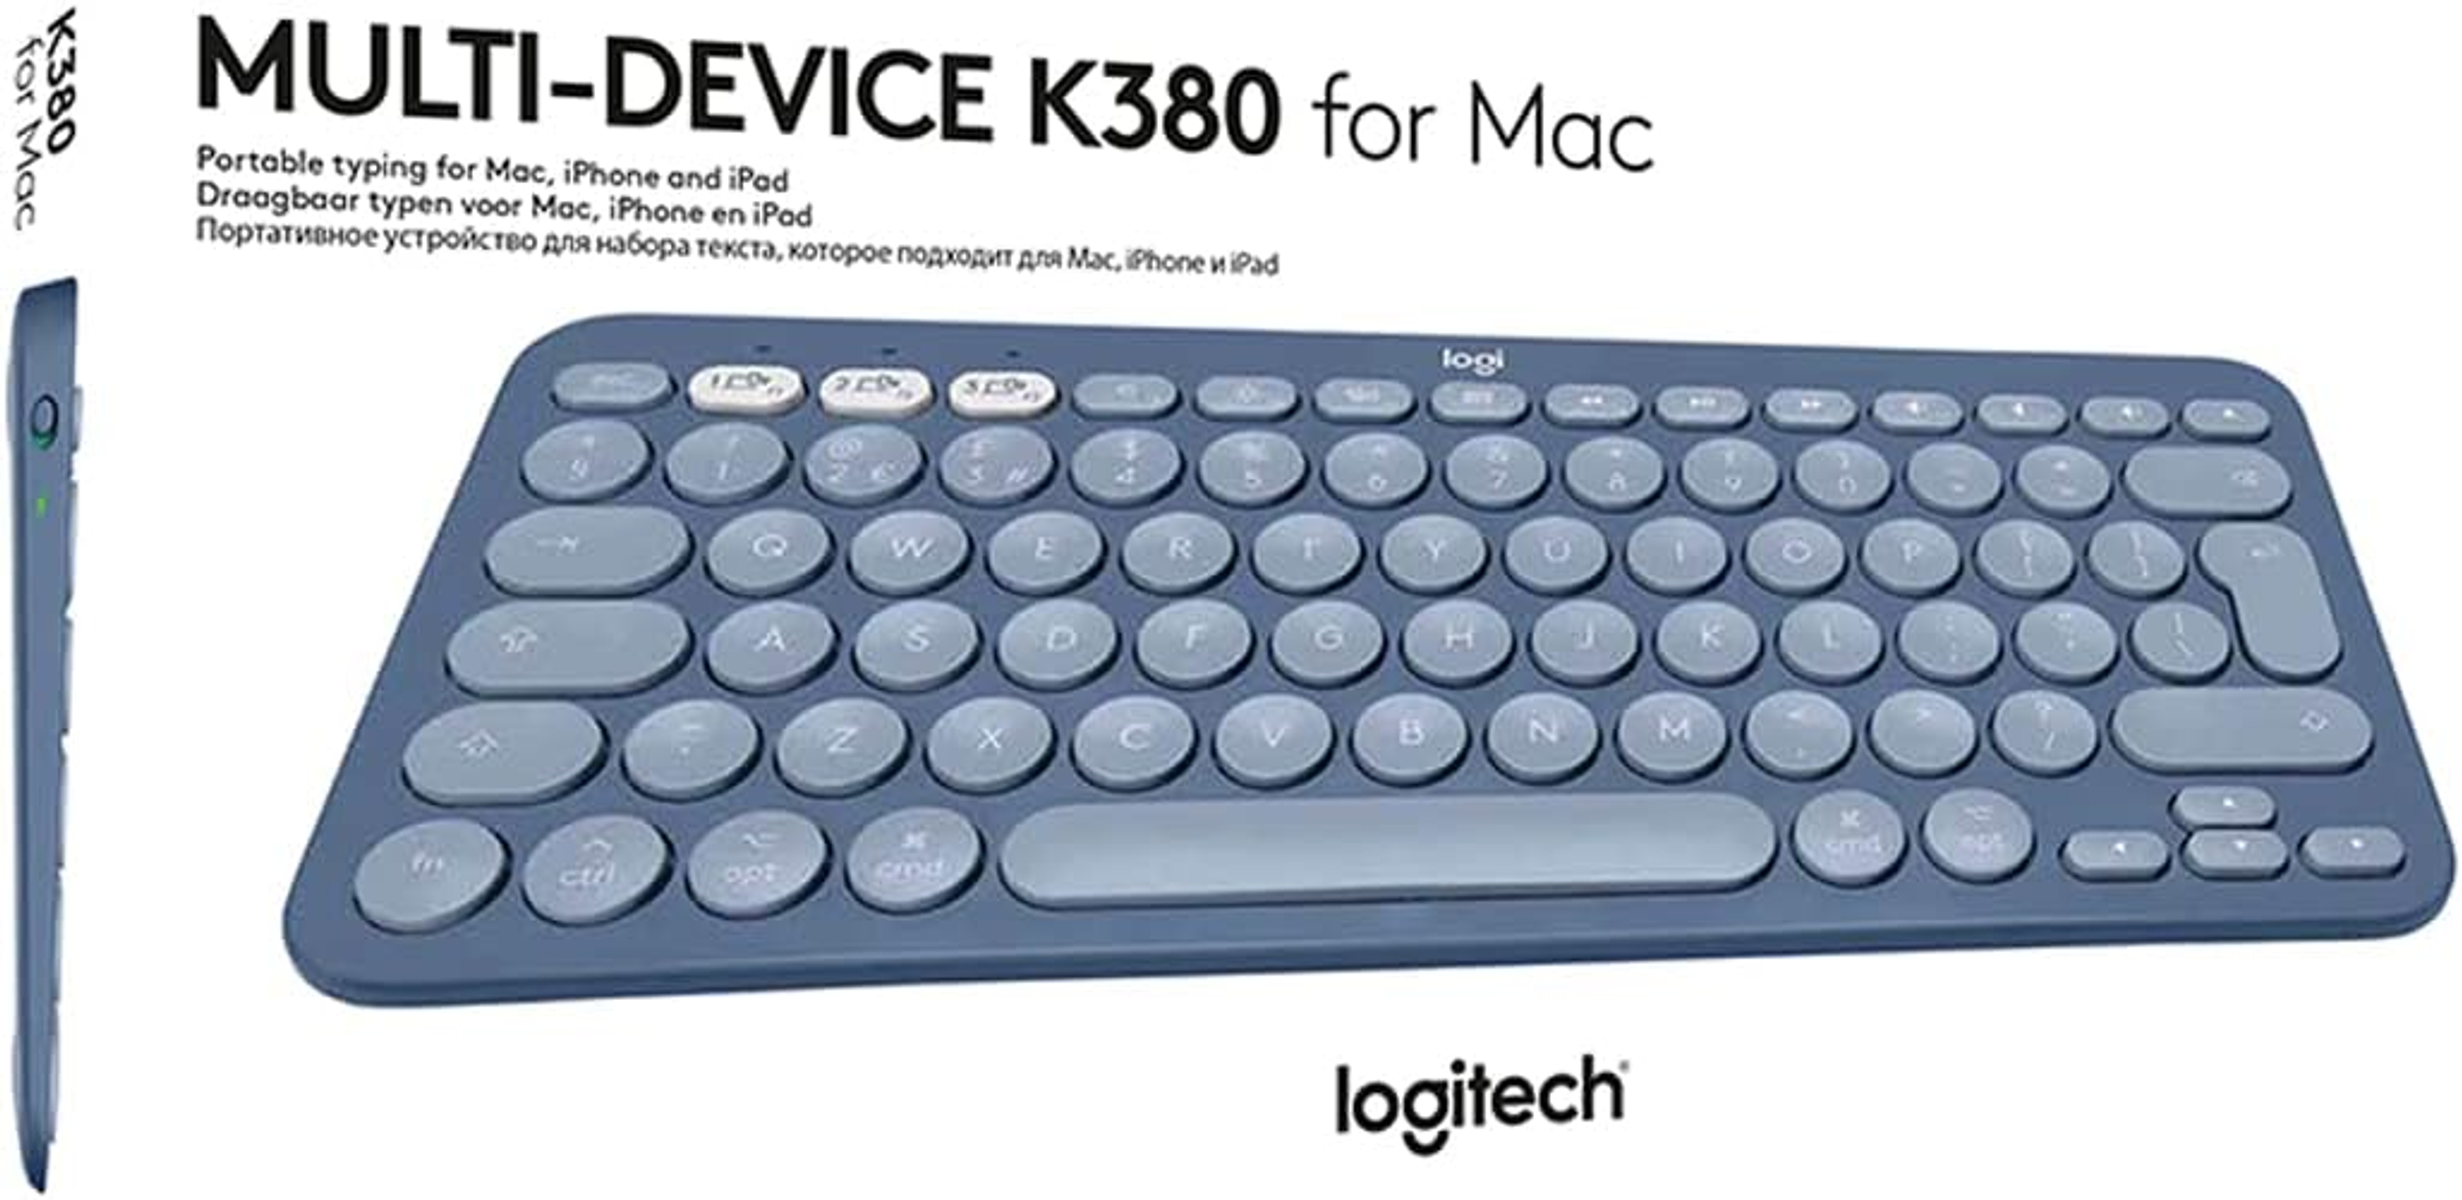 LOGITECH 920-011180, Tastatur